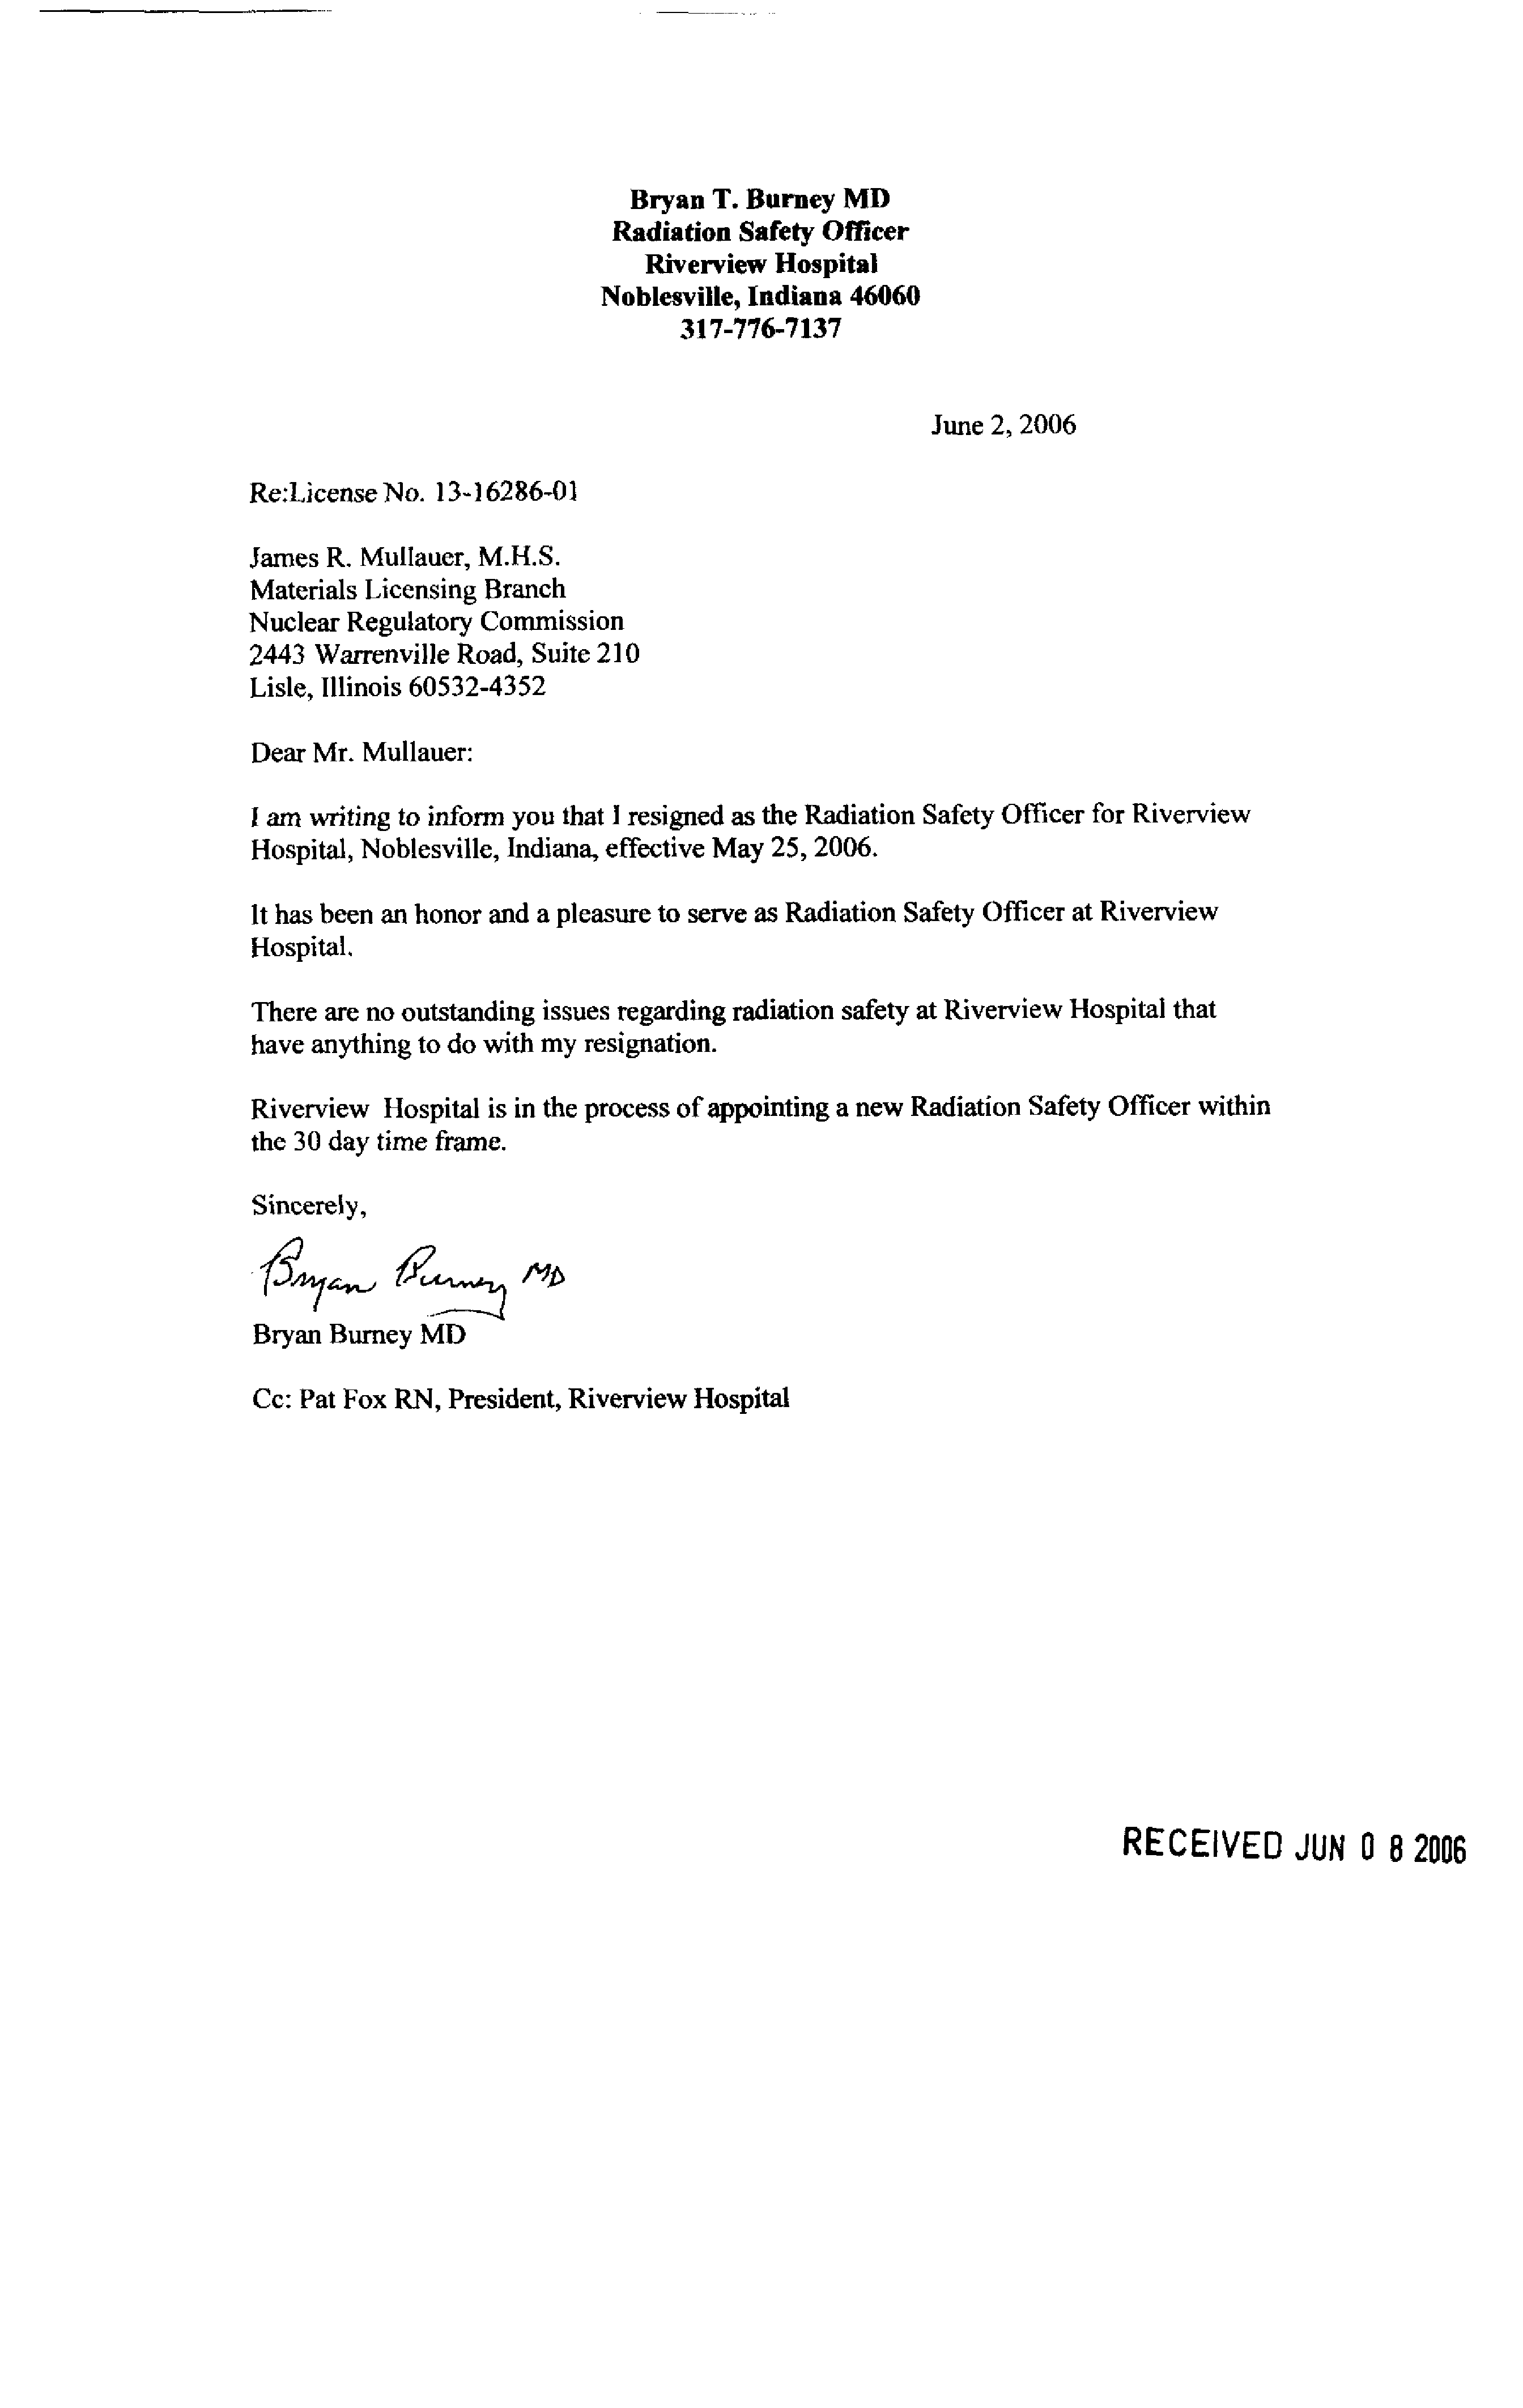 radiation safety officer email resignation letter modèles